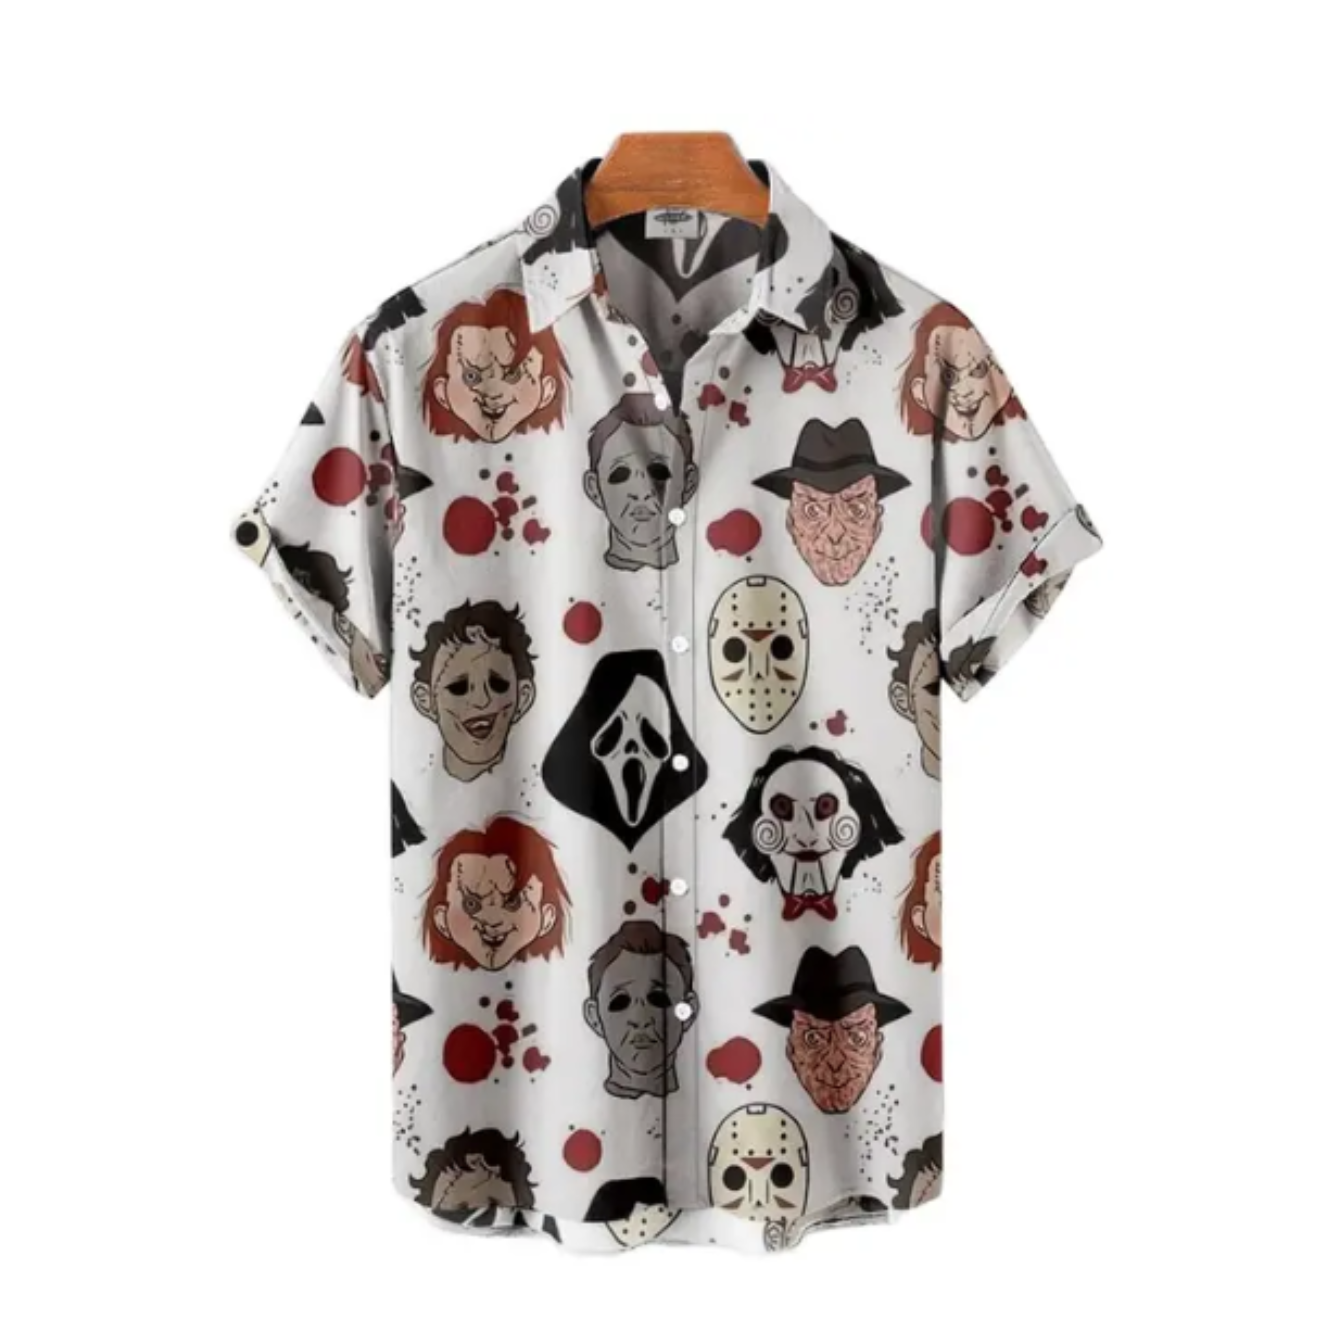 Horror Chibi Faces 3D Print Shirt